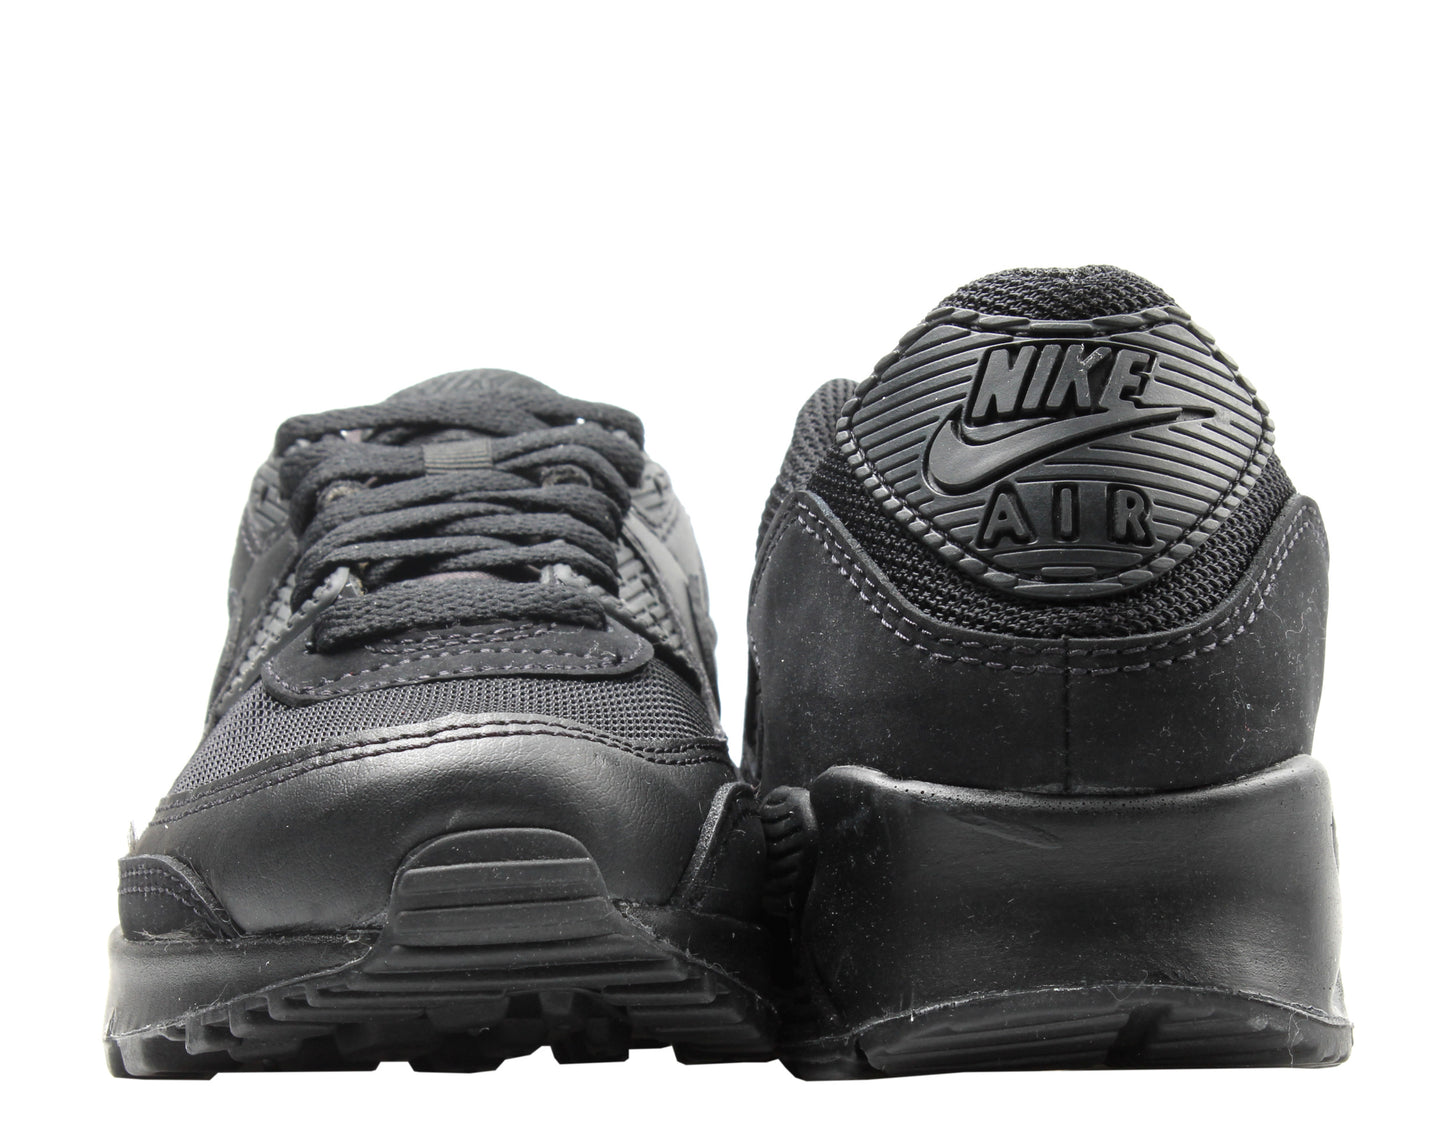 Nike Air Max 90 Triple Black/Black-Black Women's Running Shoes CQ2560-002